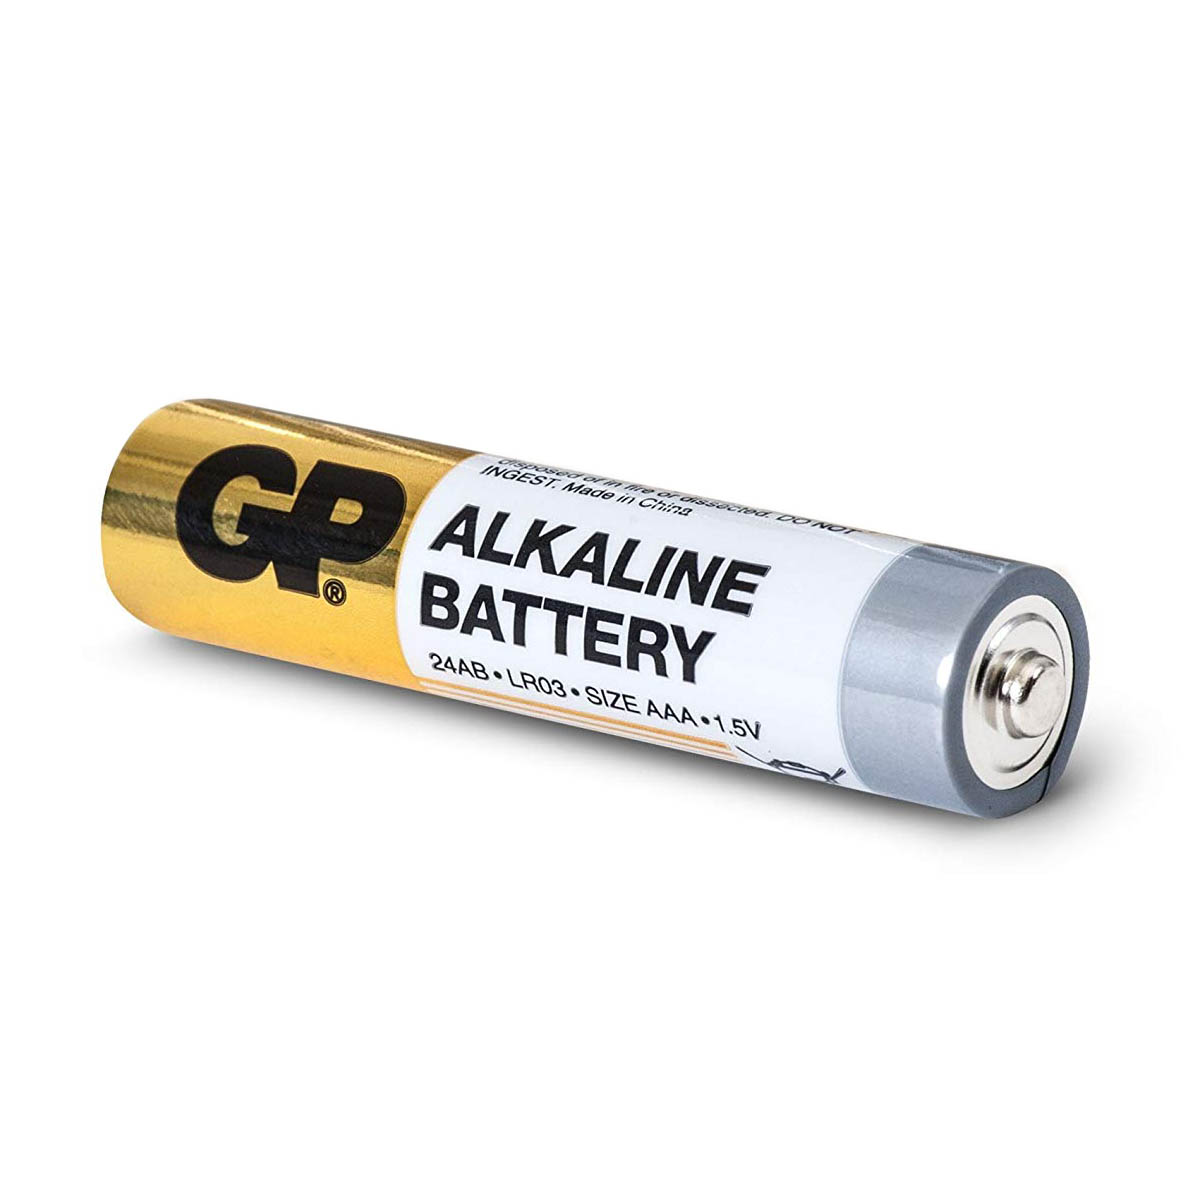 Aa battery. Батарейки GP Alkaline Battery. Батарейка GP lr03 (AAA) 1шт. Батарейка GP super Alkaline Battery, 1.5 в, lr03 sr20. Элемент питания lr6 AA 1,5v GP Alkaline.